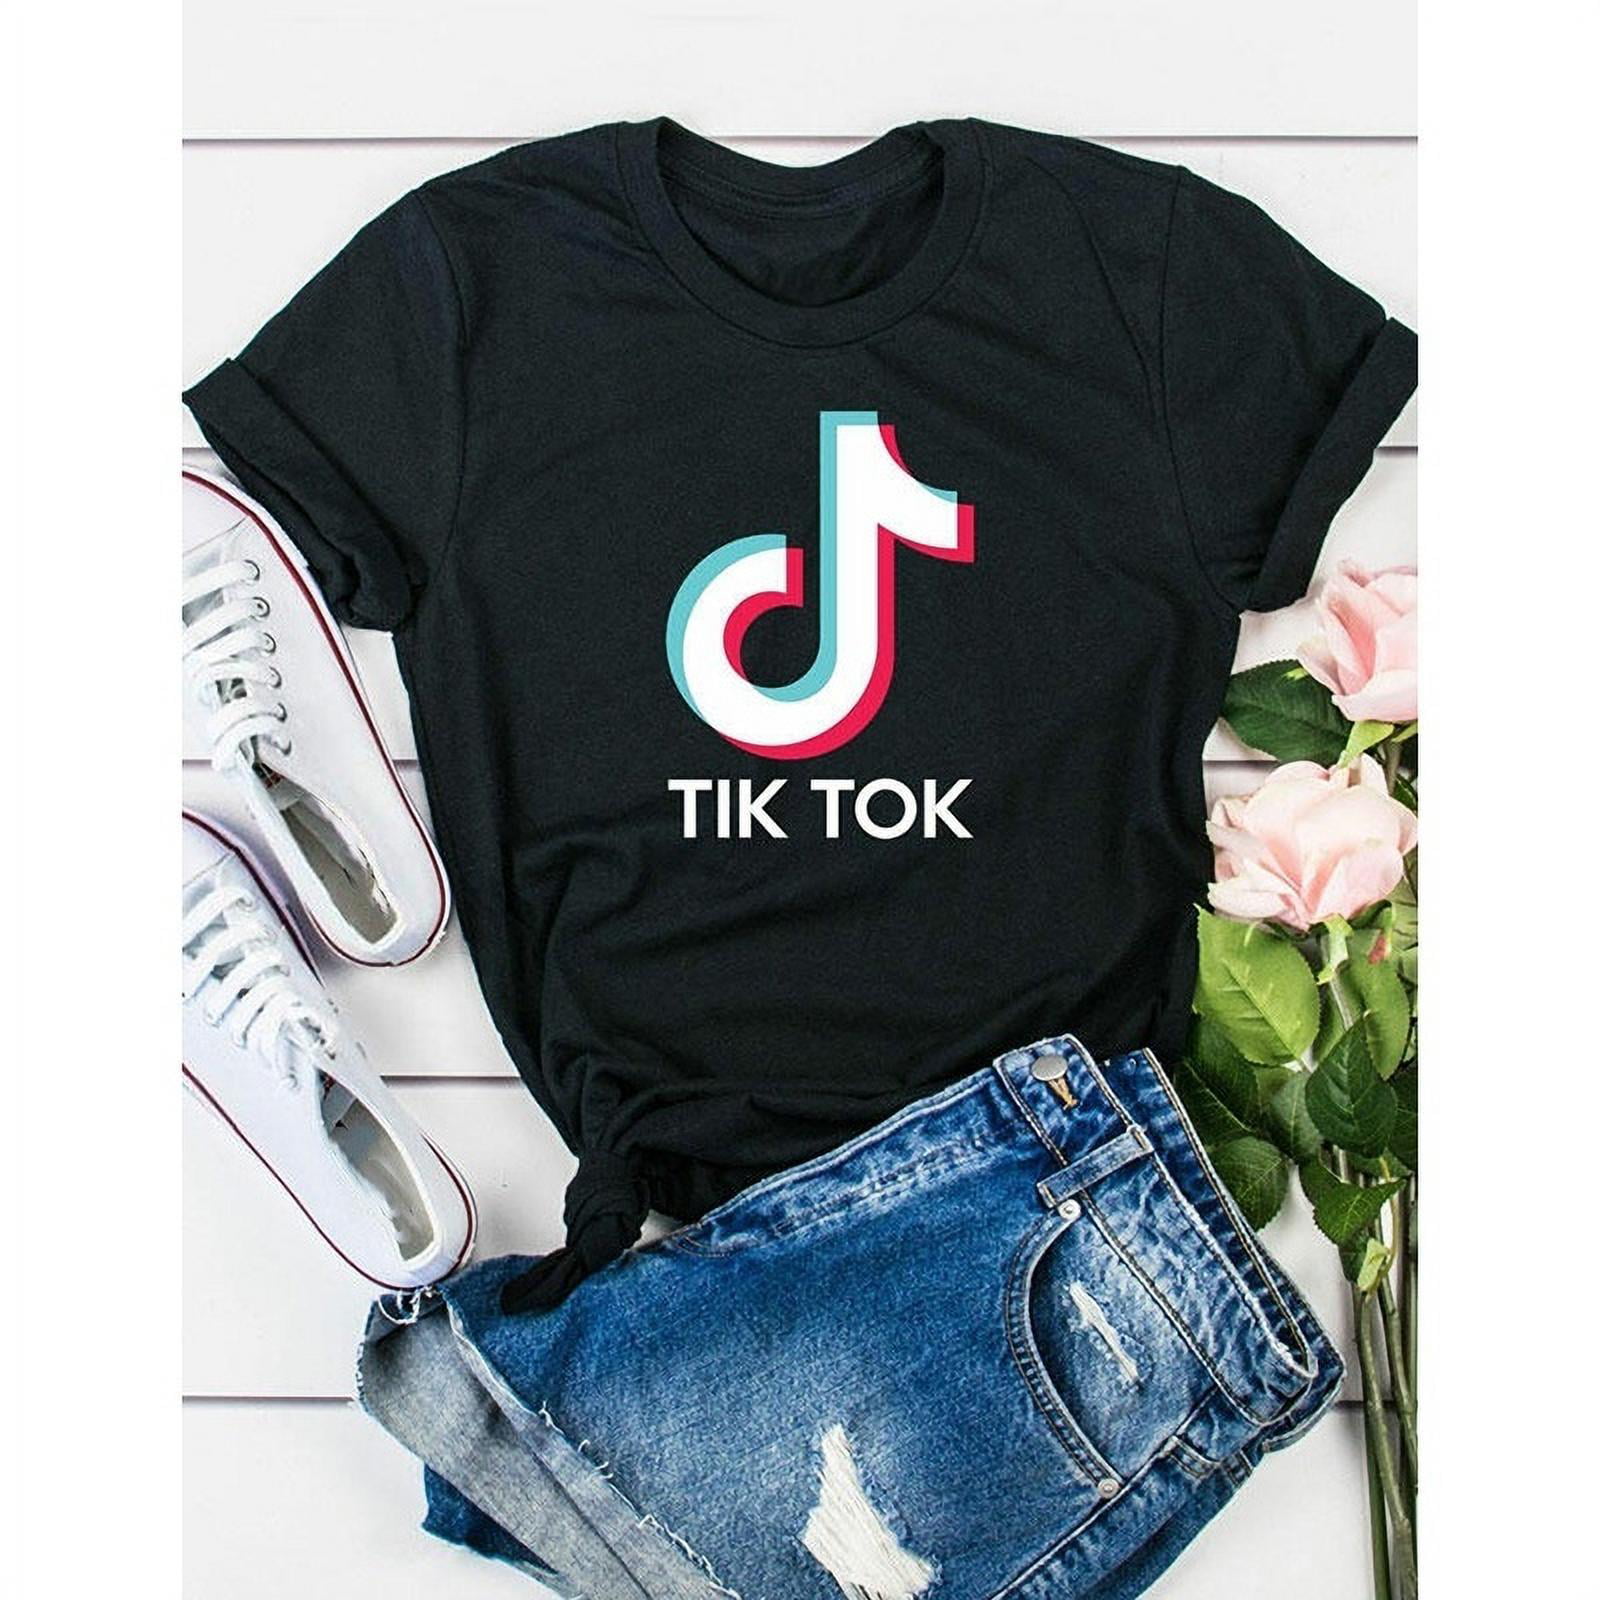 Tik Tok Clothes T Shirt Girl Kids Tee Shirt With Username Gift Idea Boys Fan